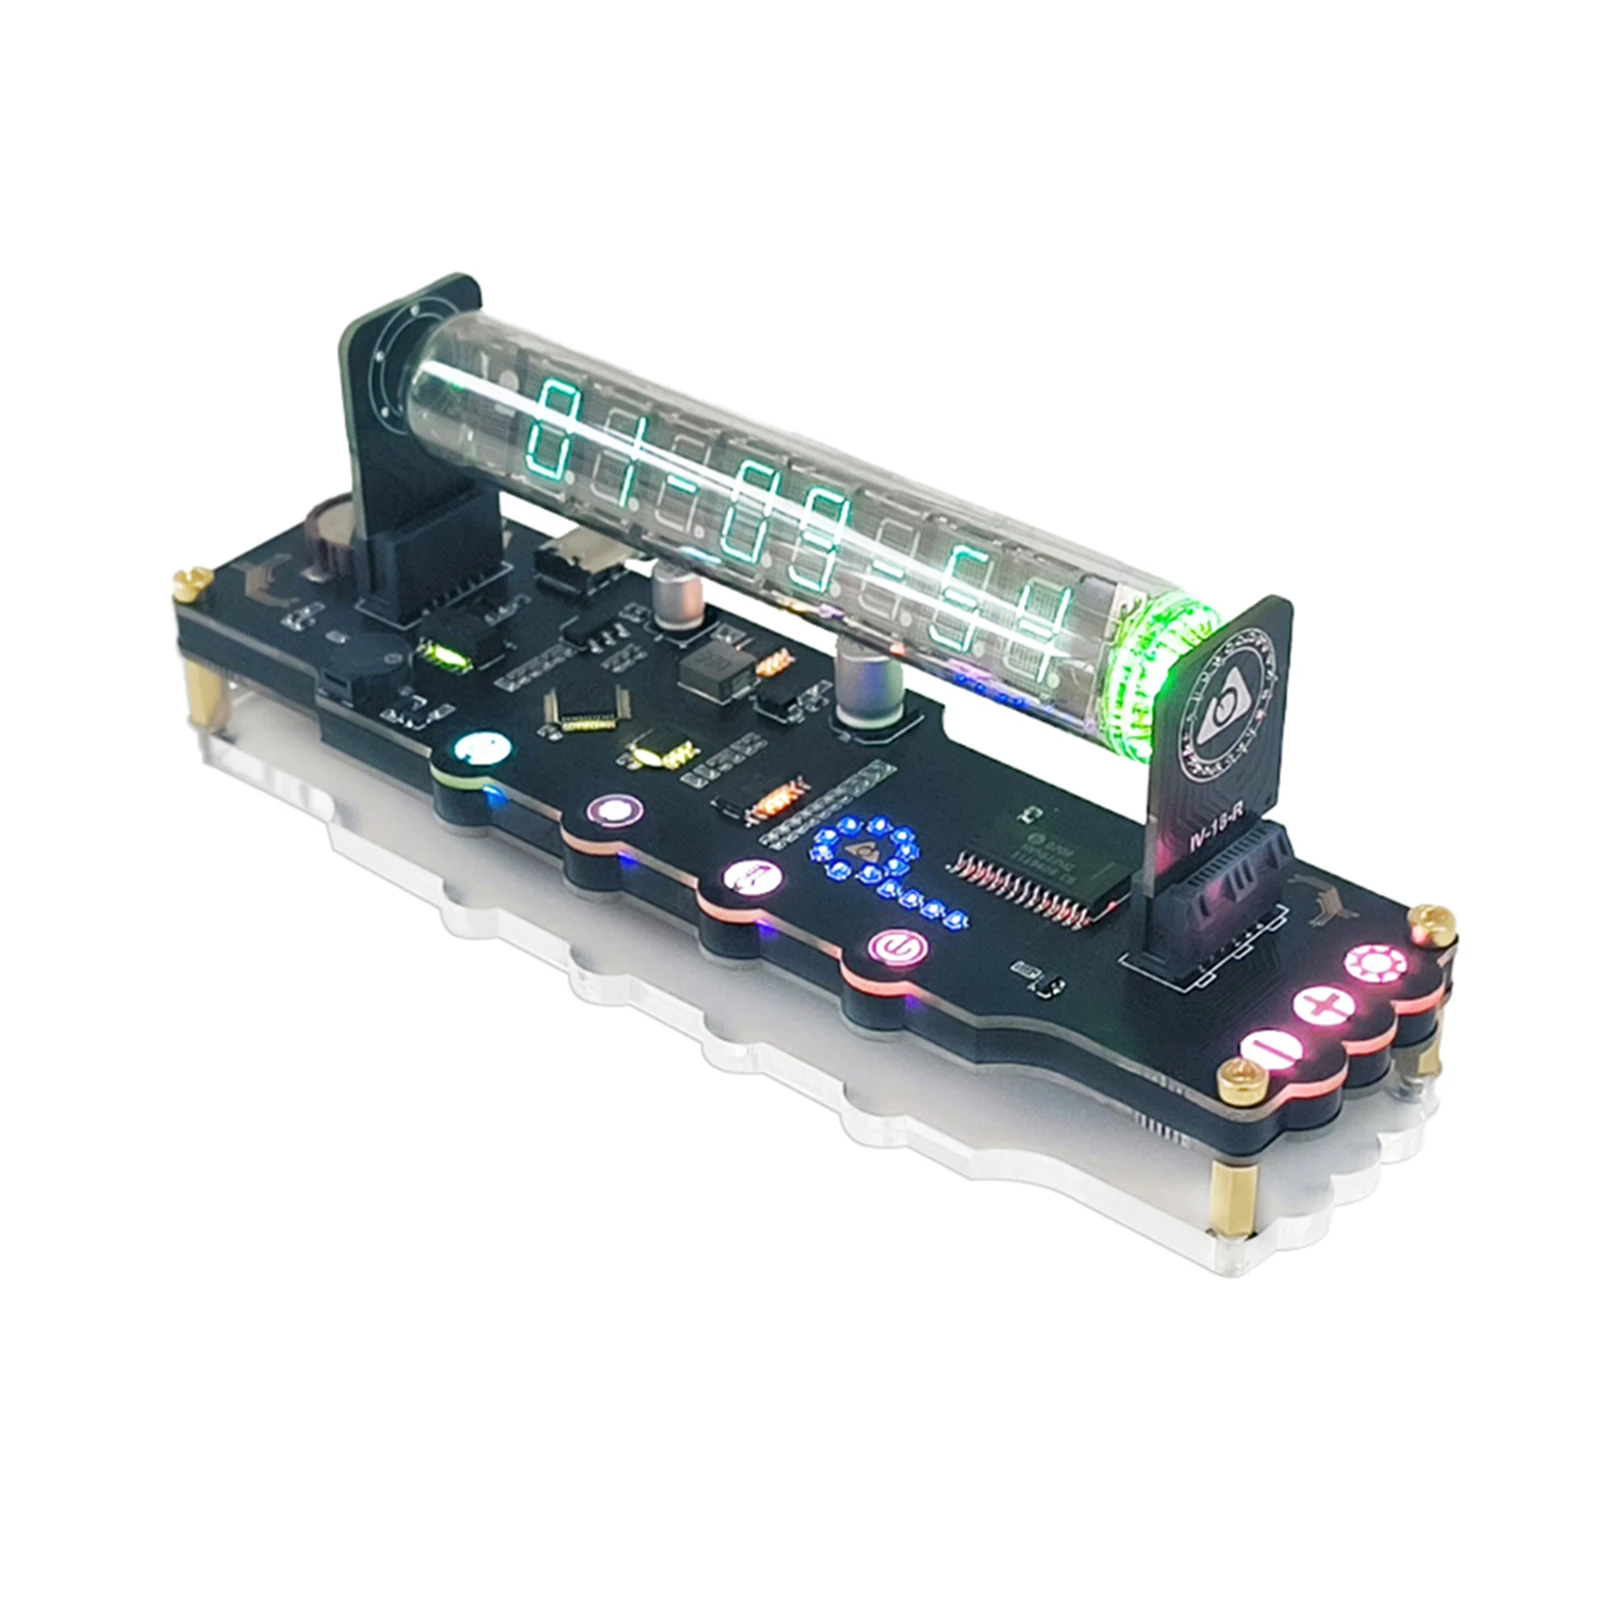 

Desktop Visual Enjoyment with Fluorescent Tube Clock Unique Circuit Board Display Built in Colour Gradient Modes